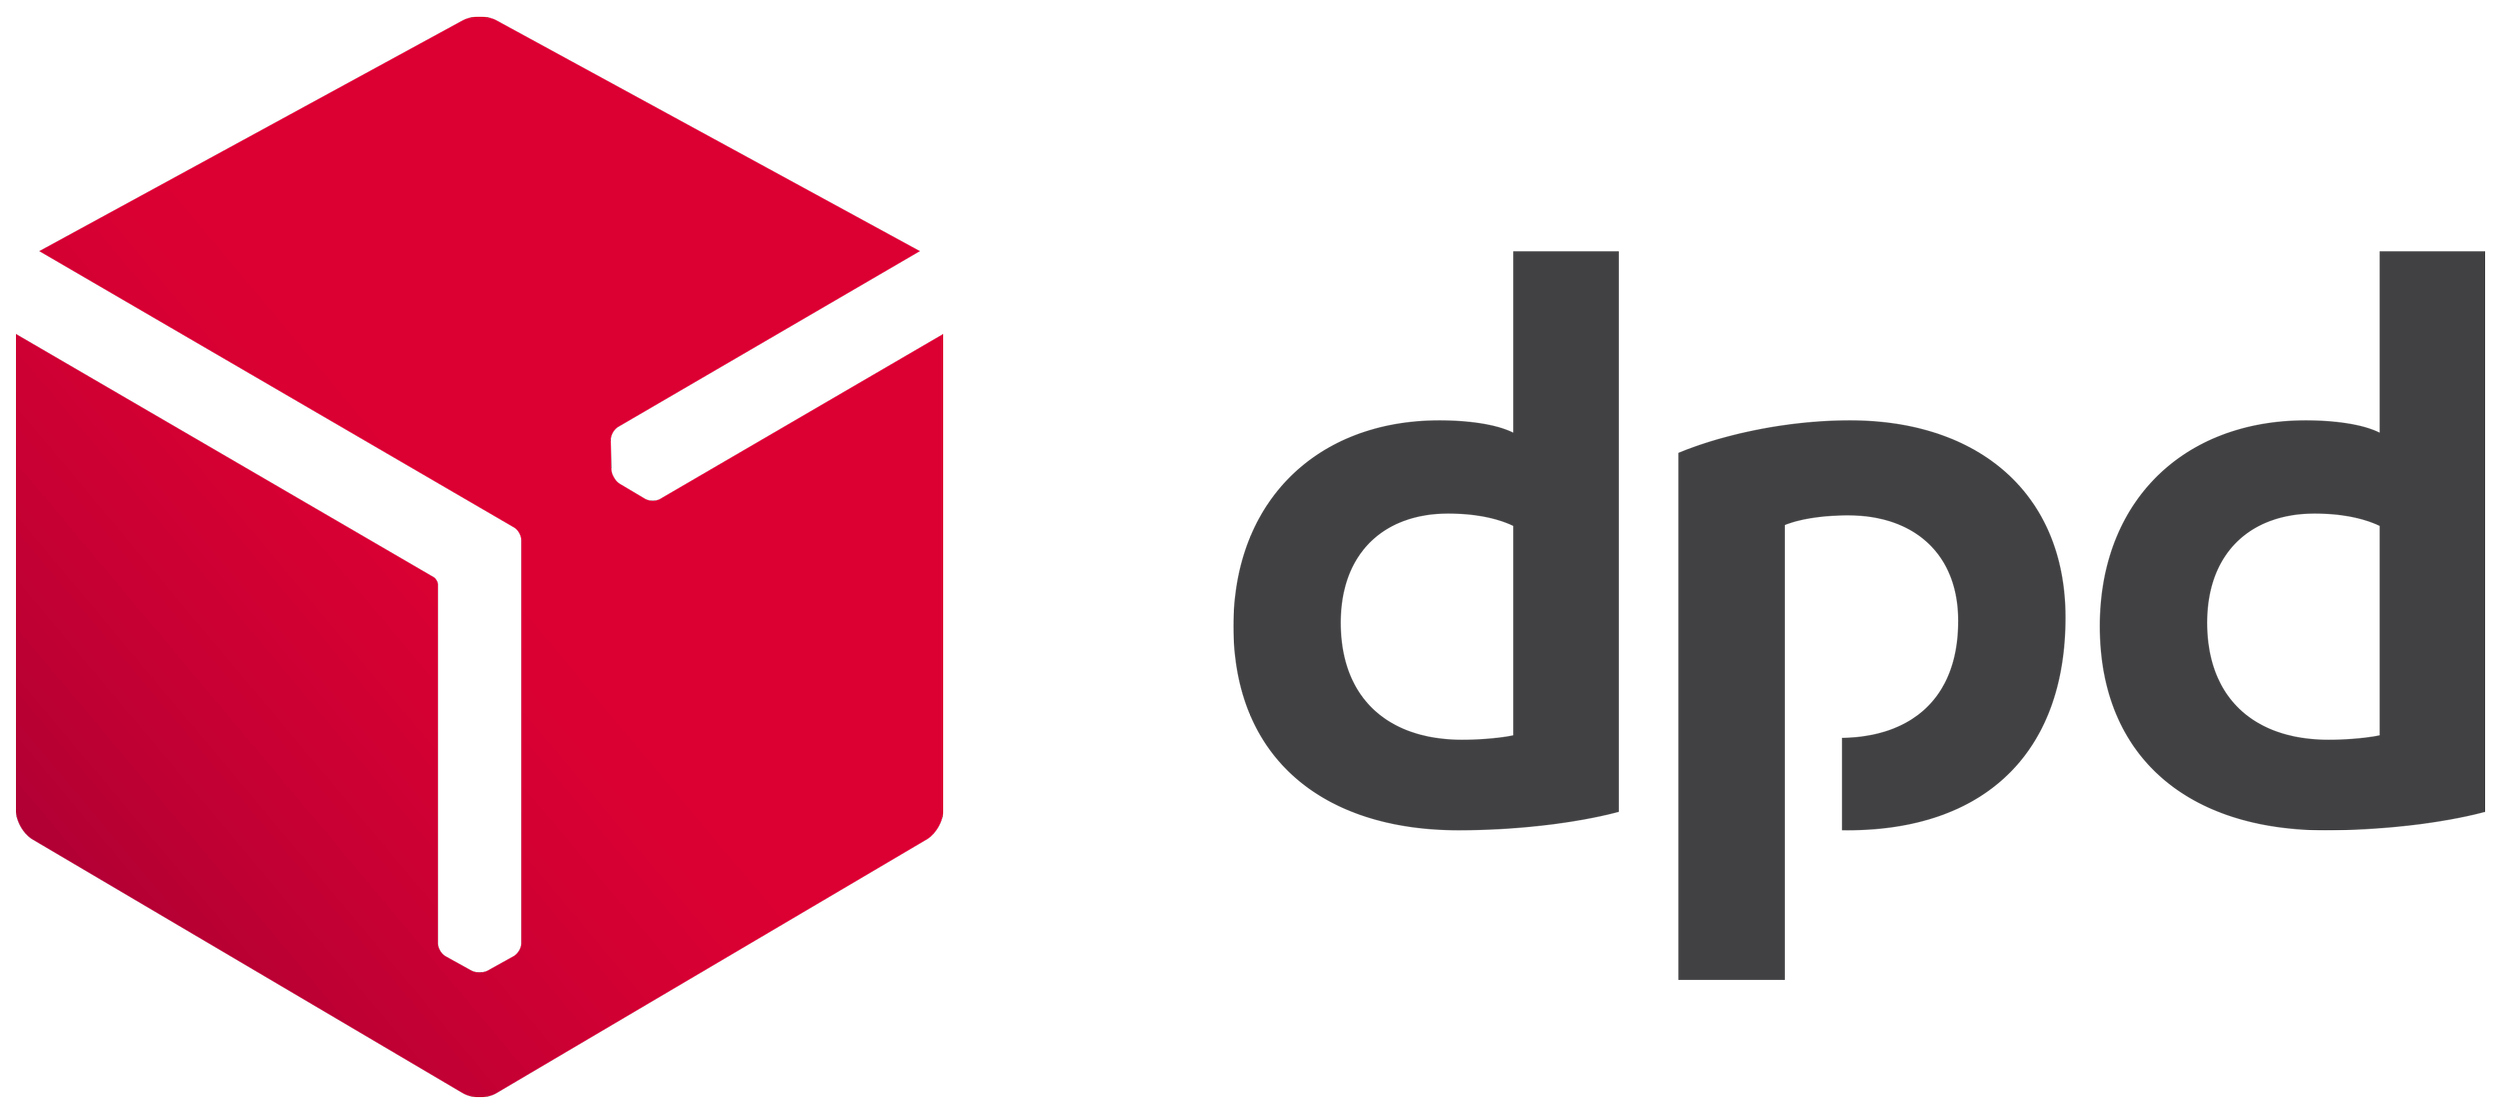 dpd logo.png